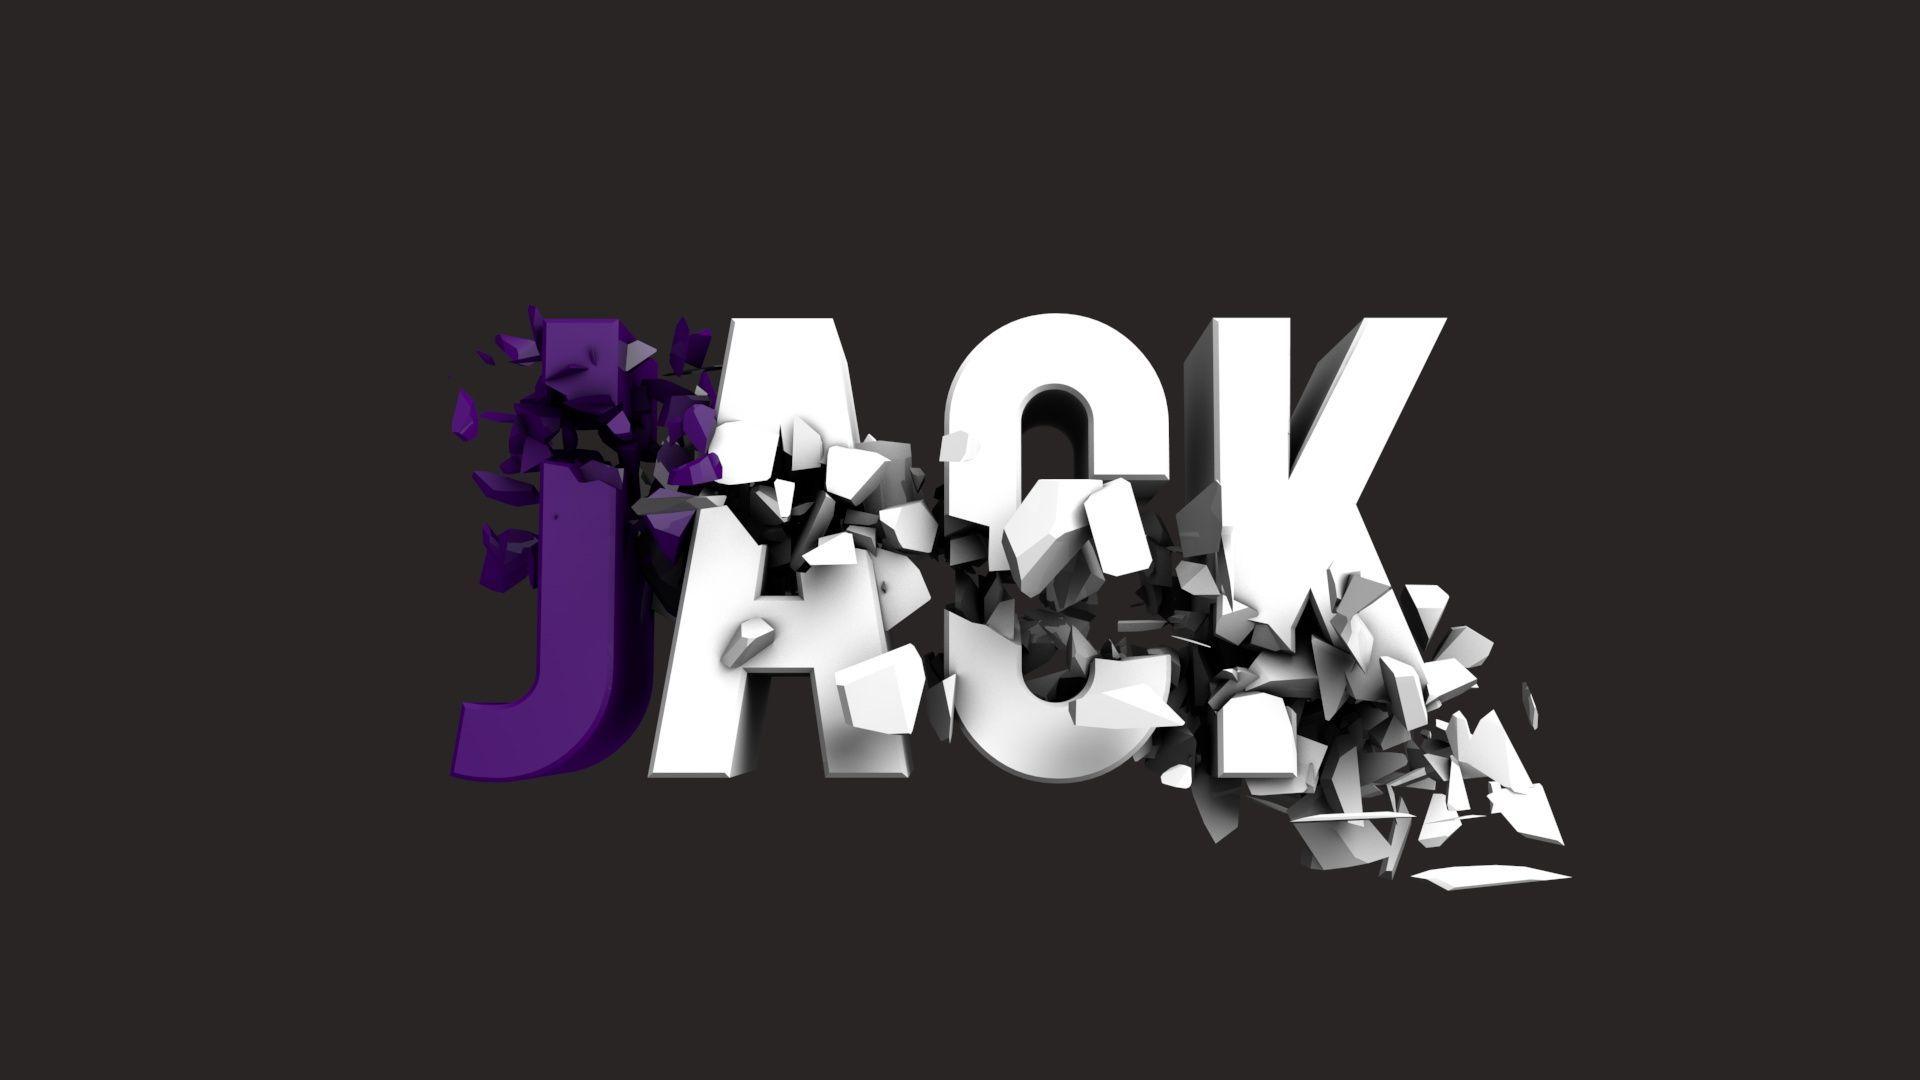 jack name wallpaper